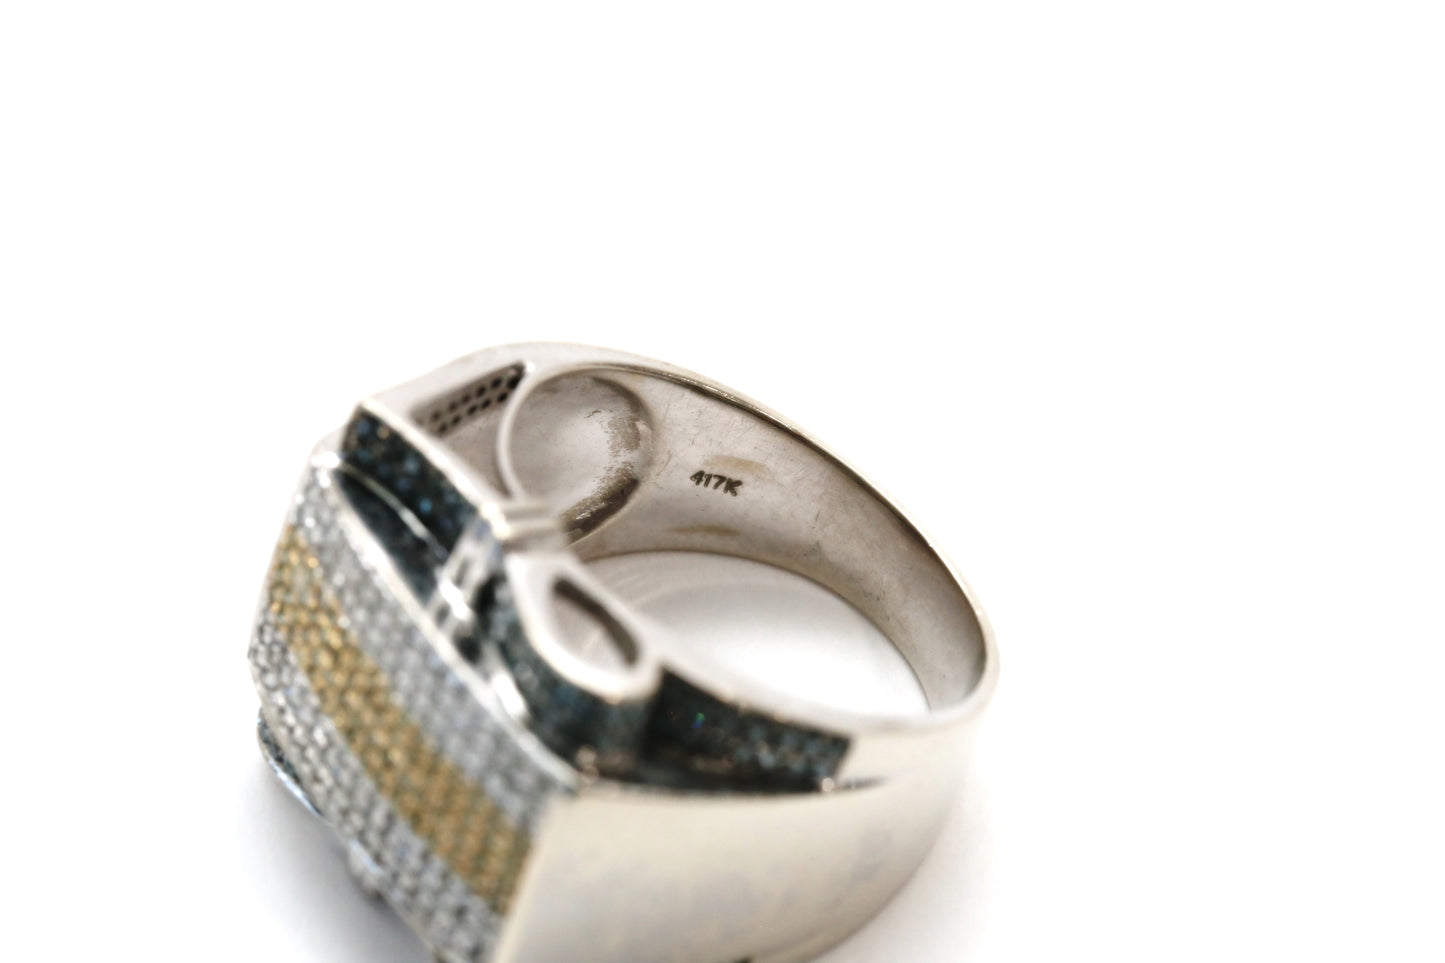 10k White Gold White Yellow & Blue Diamond Flat Top Ring, Size 11.5 - 13.1g